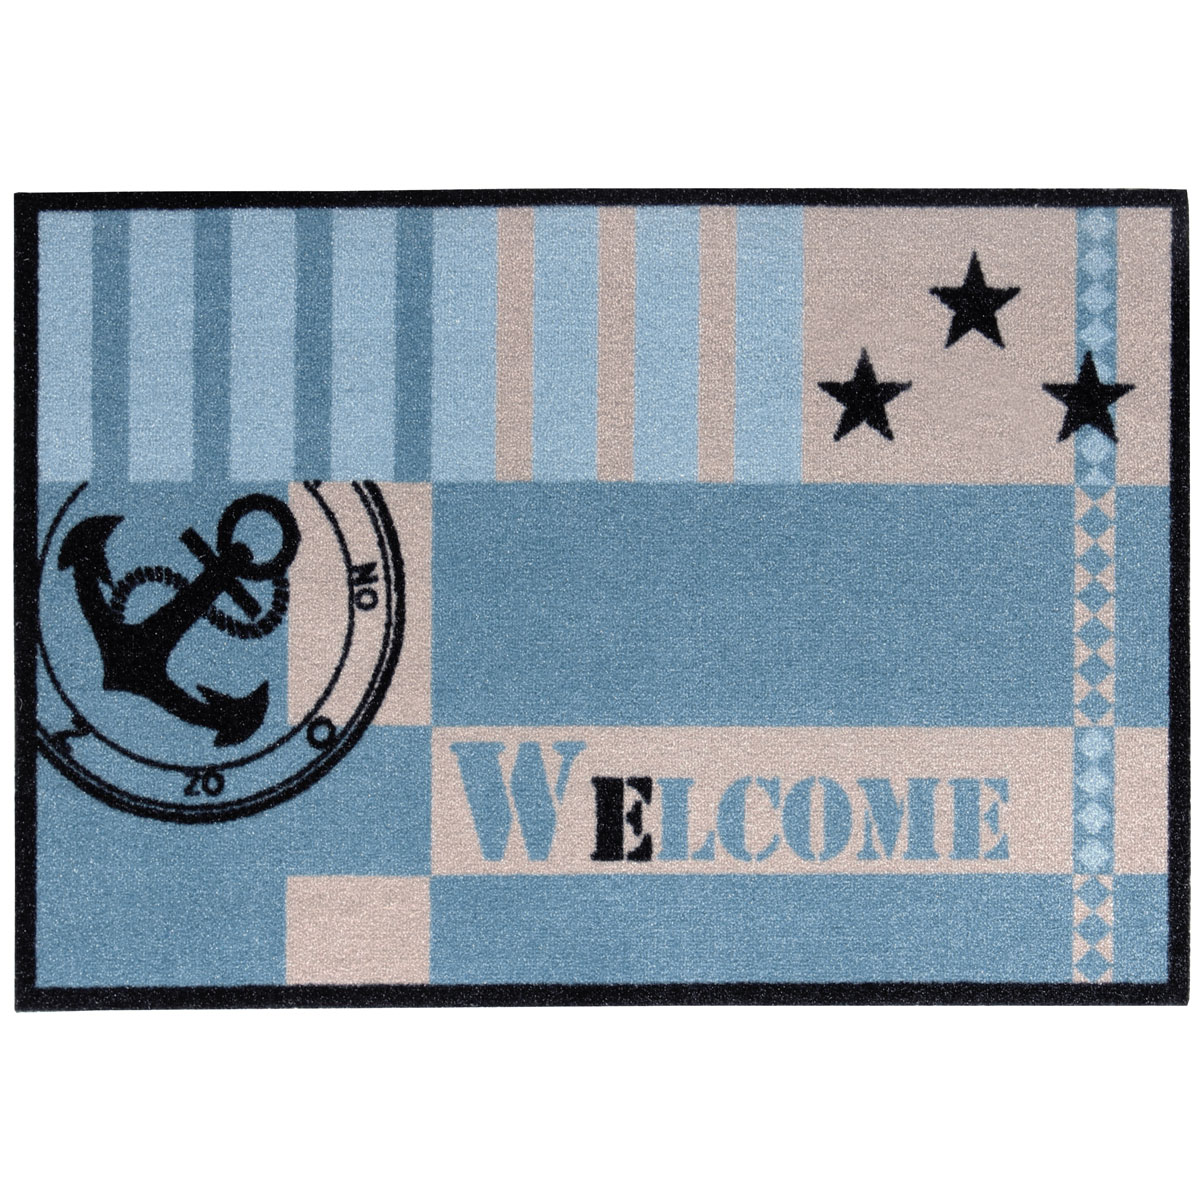 Welcome | 58 x cm Schmutzfangmatte marine Blau blau 303146 | 39